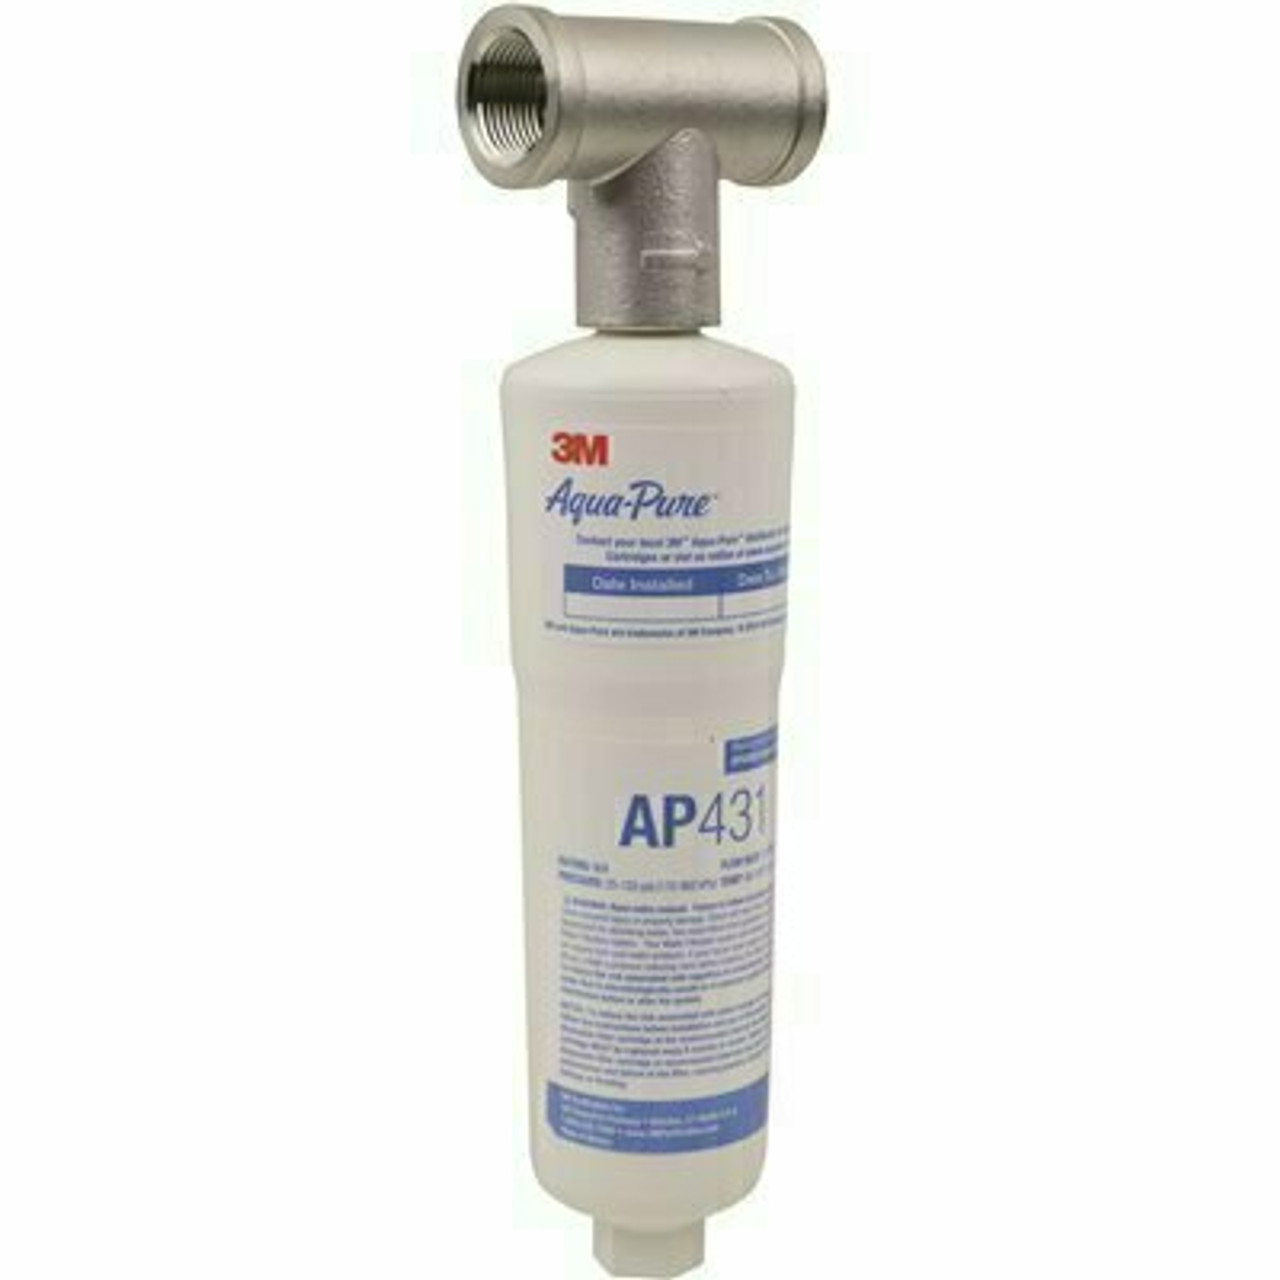 Aquapure Aqua-Pure Whole House Scale Inhibition Water Treatment System